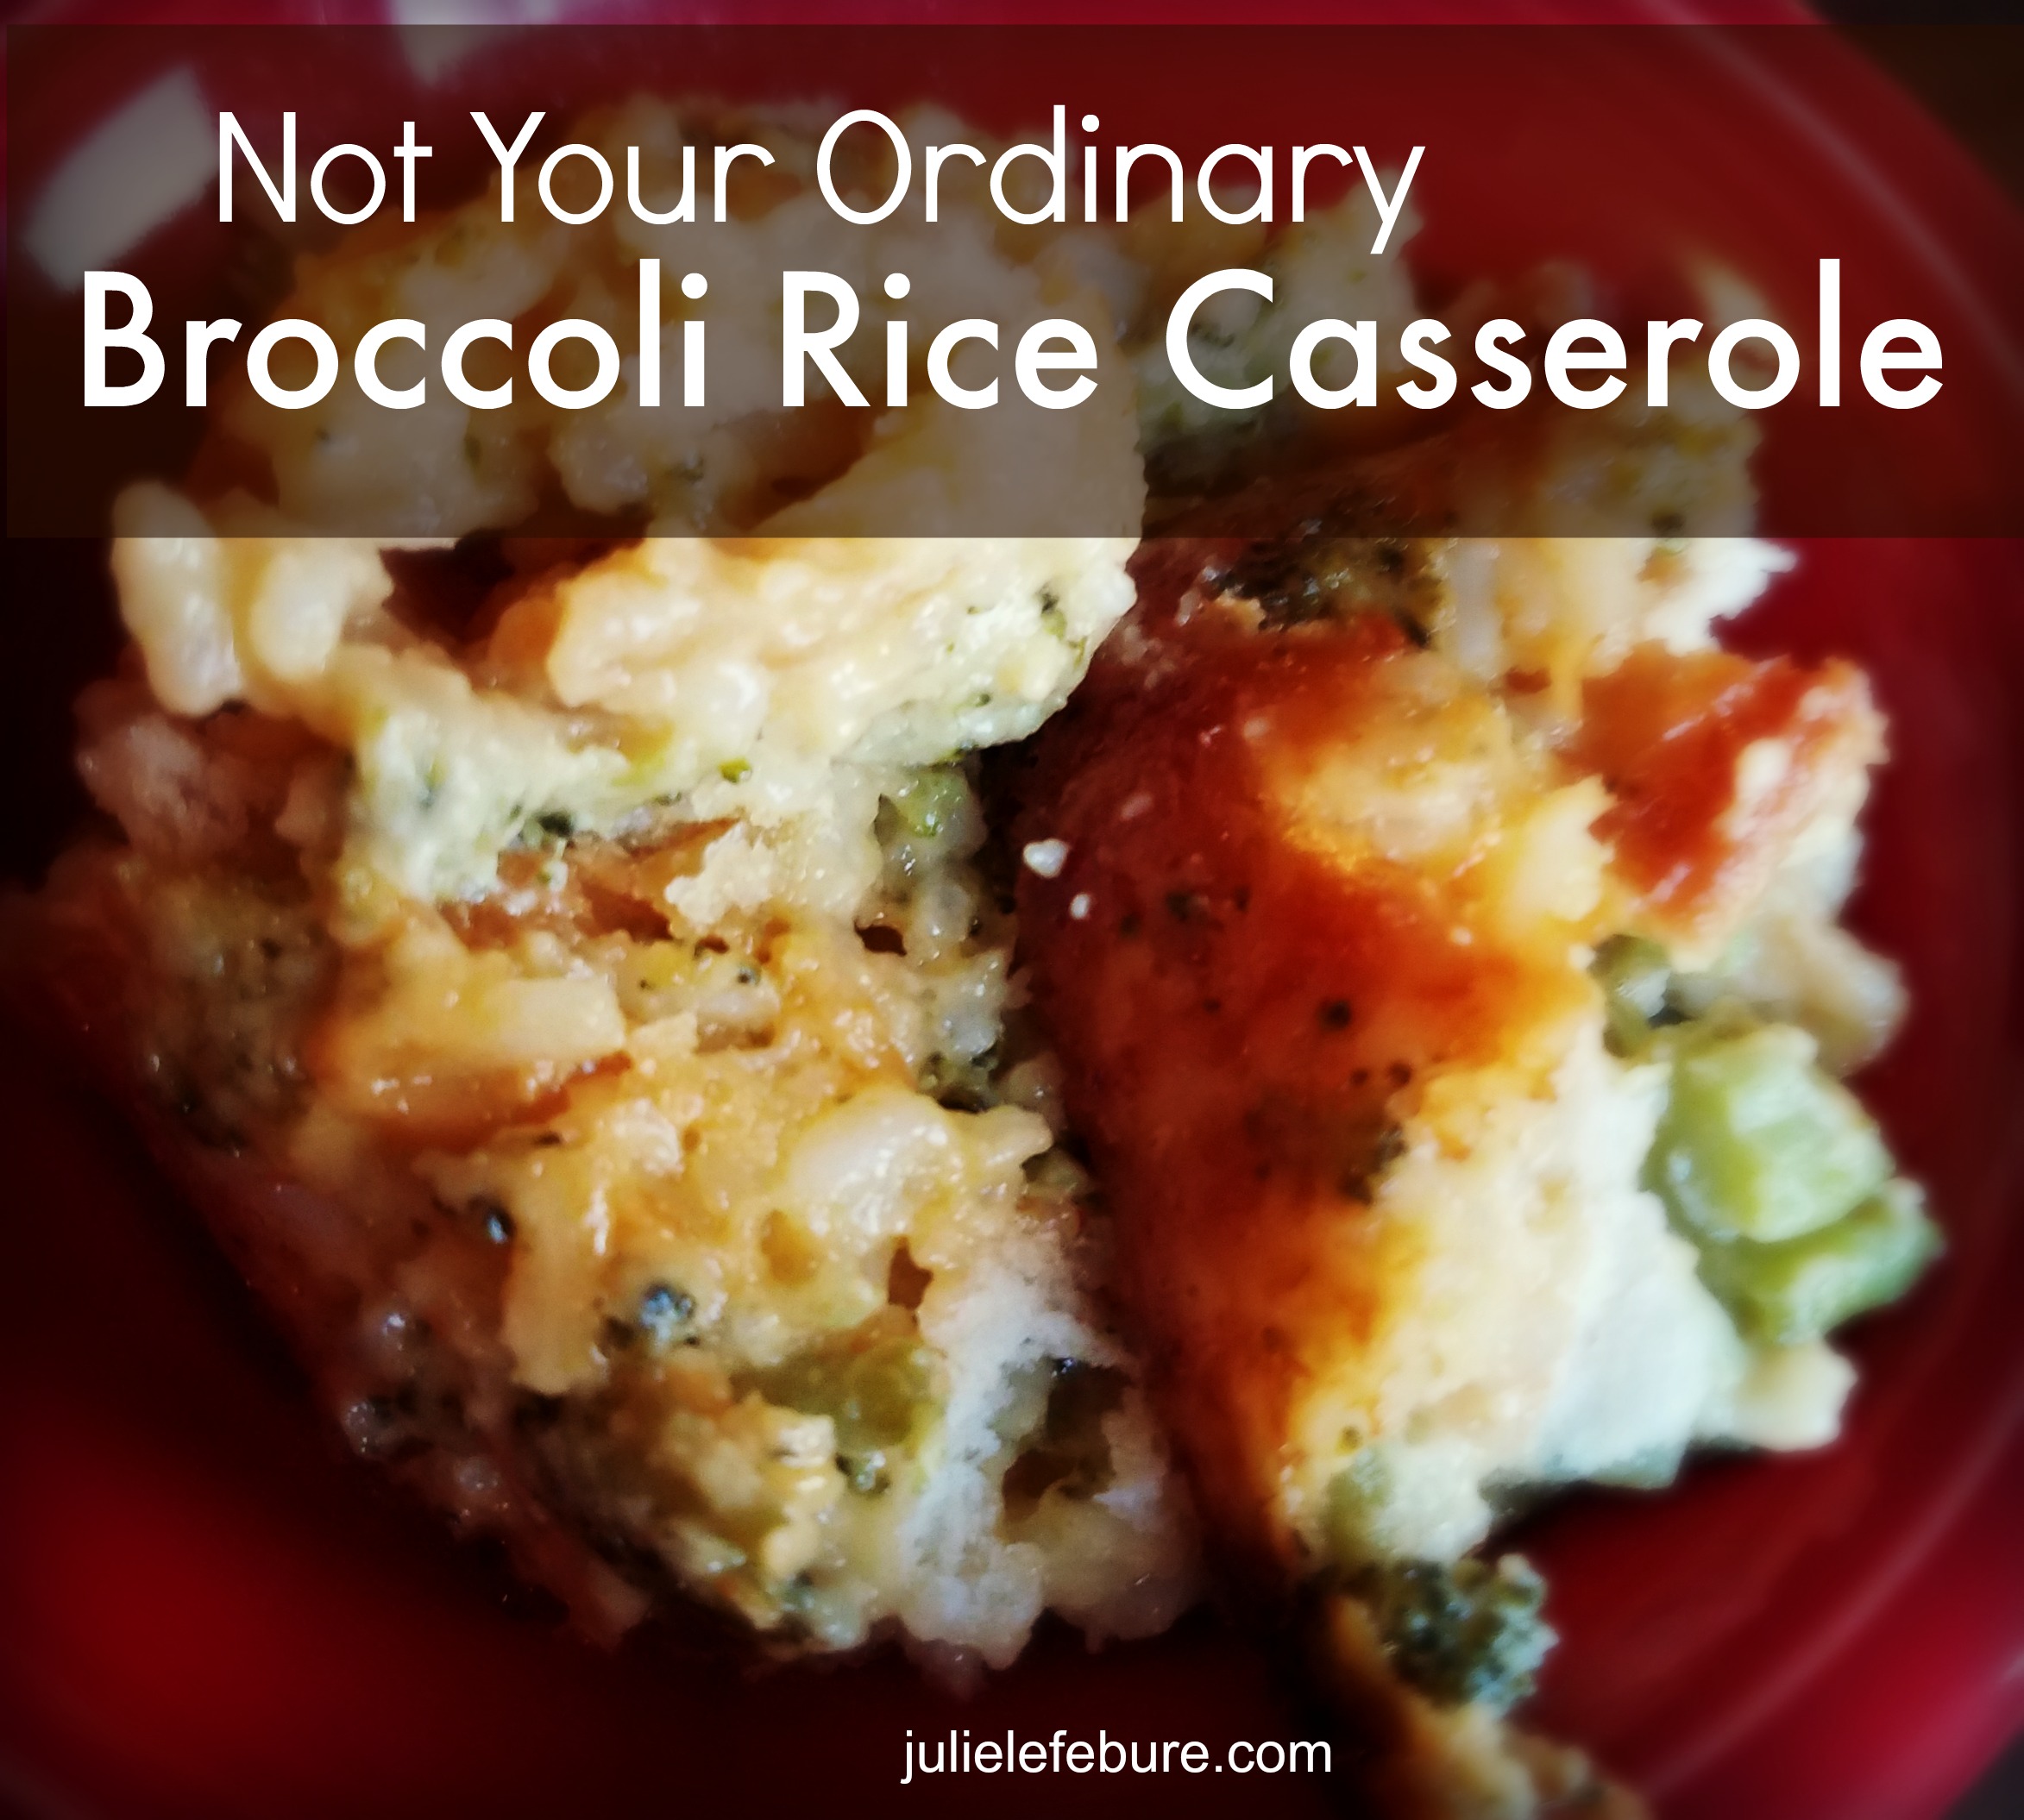 Not Your Ordinary Broccoli Rice Casserole